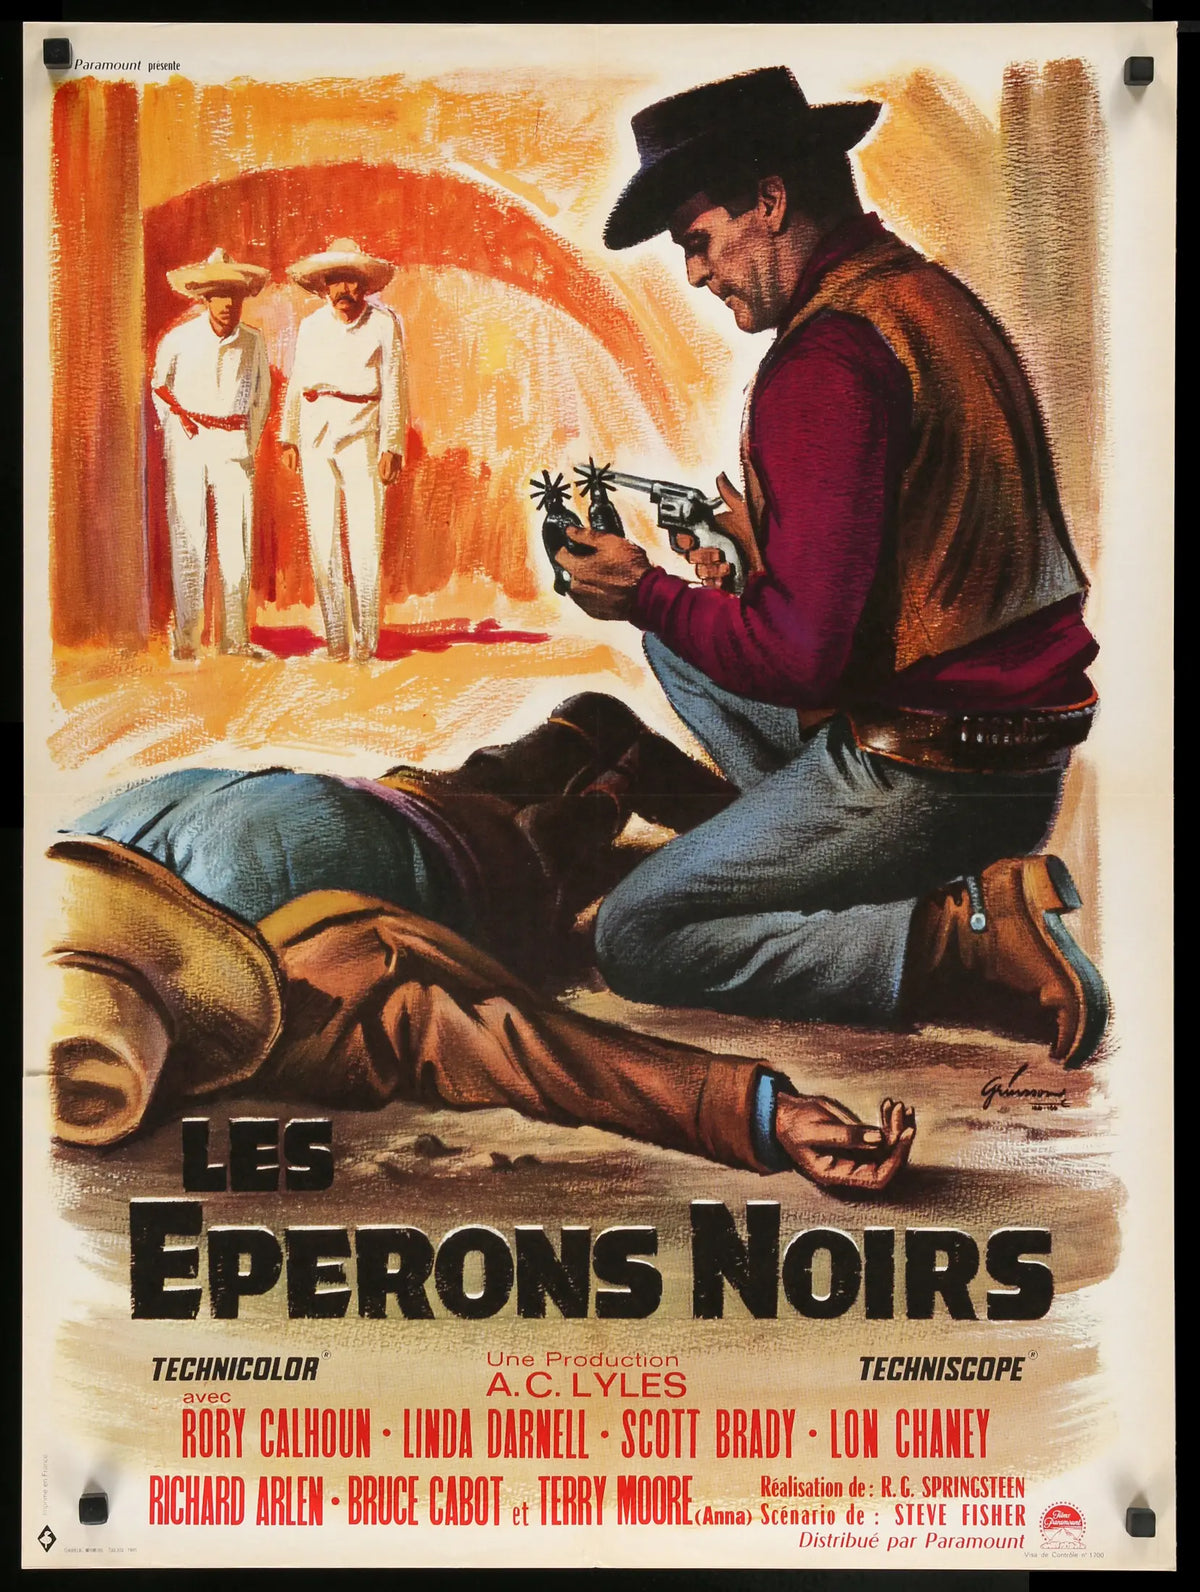 Black Spurs (1965) original movie poster for sale at Original Film Art